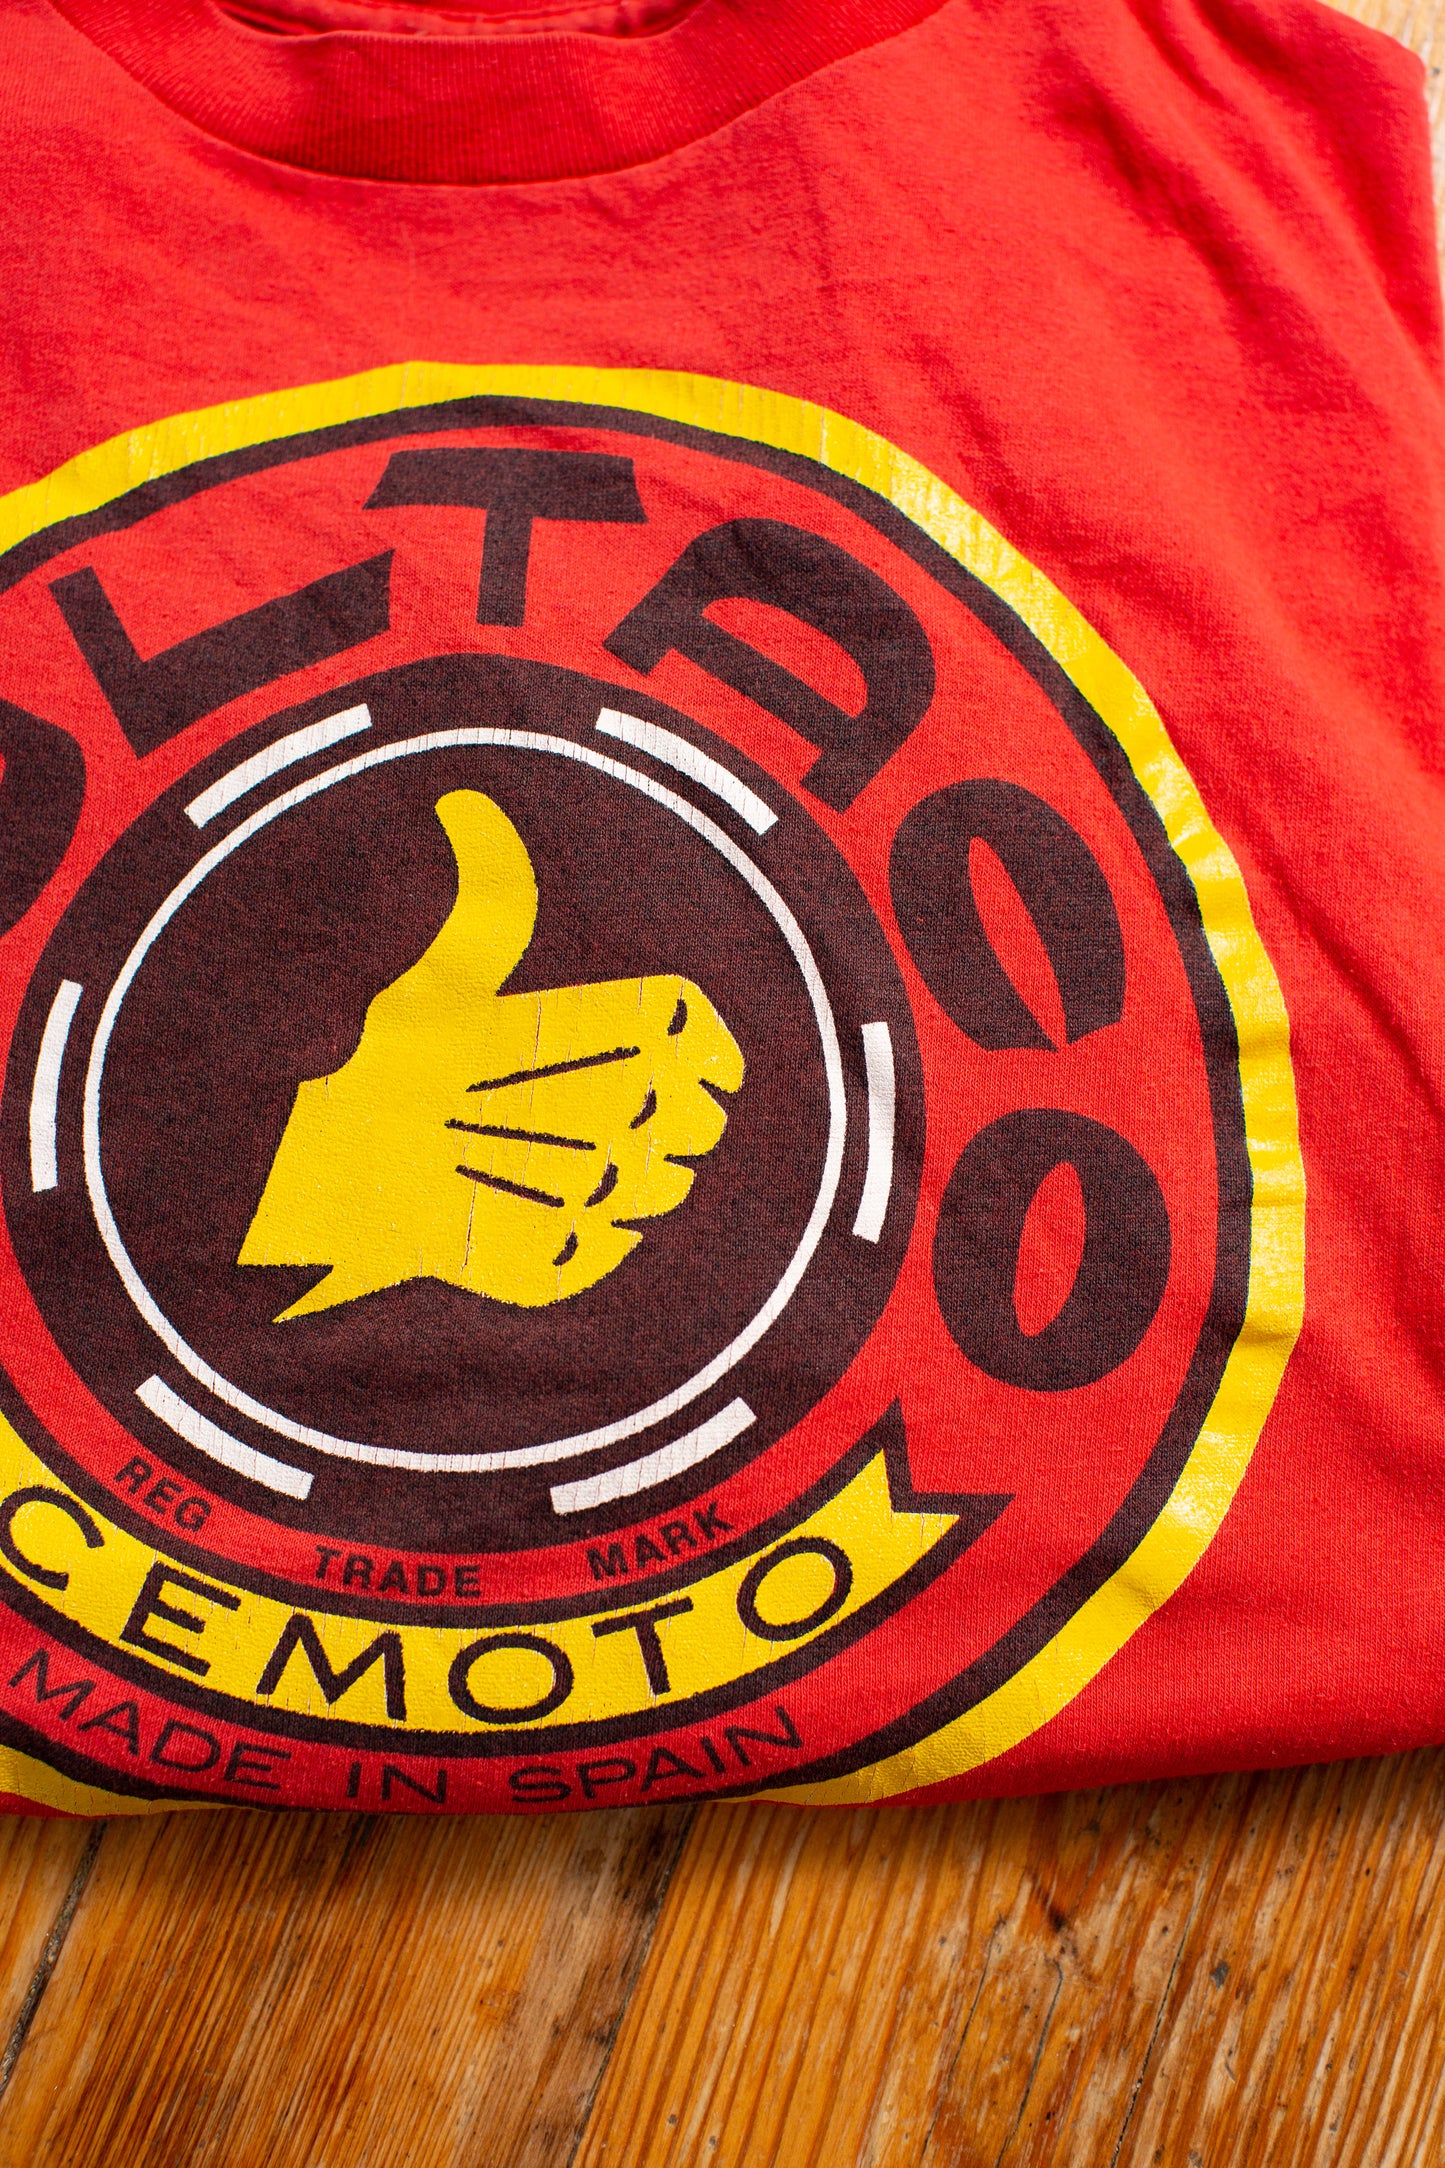 Vintage Long Sleeve Bultaco Cemoto T-shirt Size L